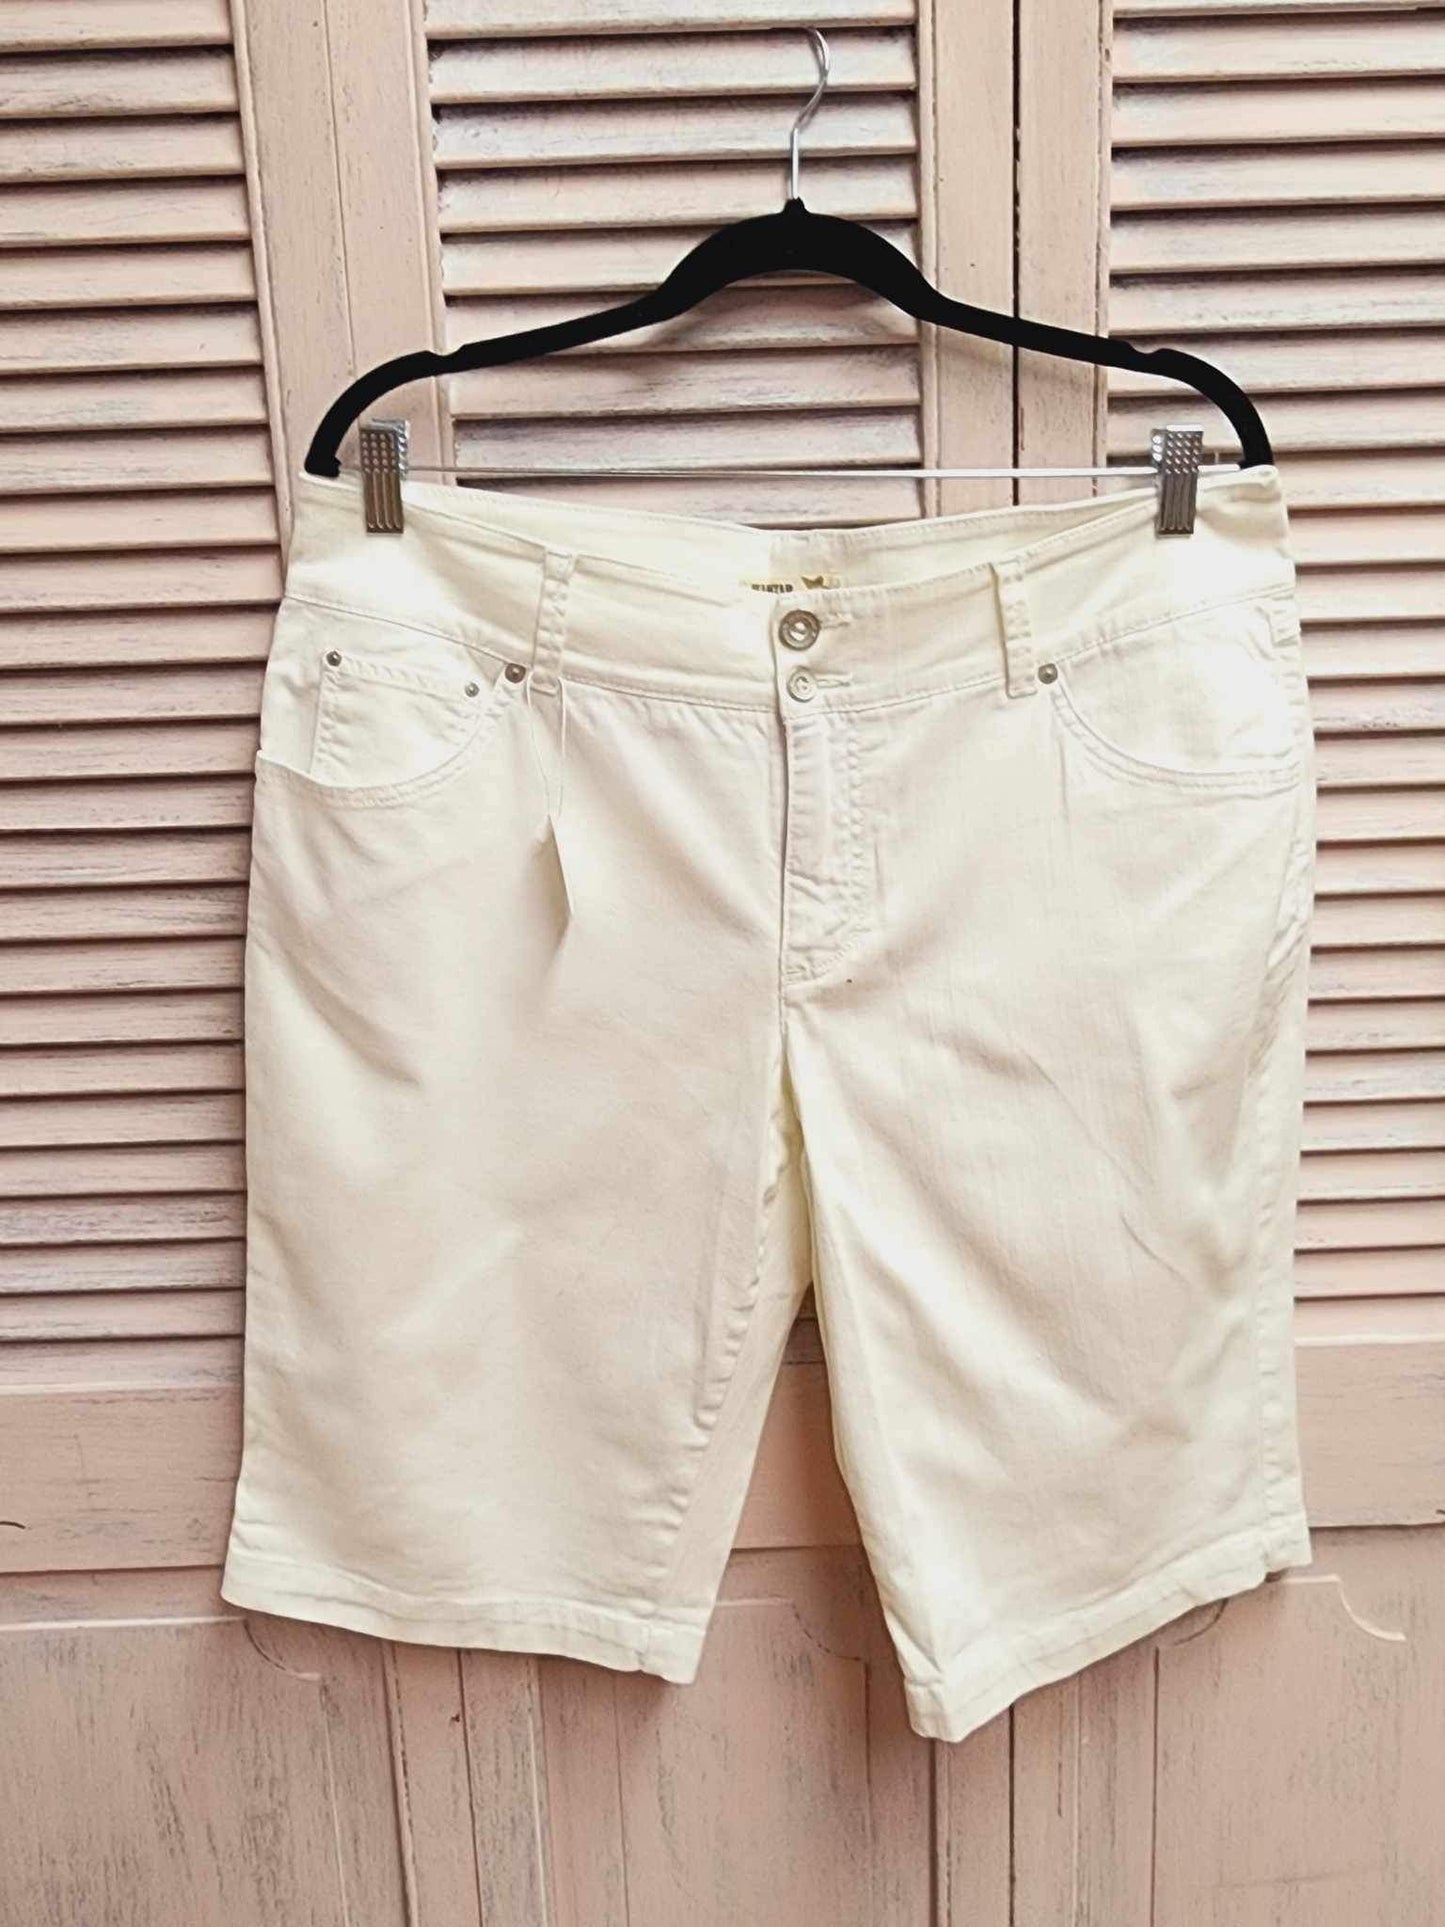 Jeanstar Bermuda Style Denim Shorts